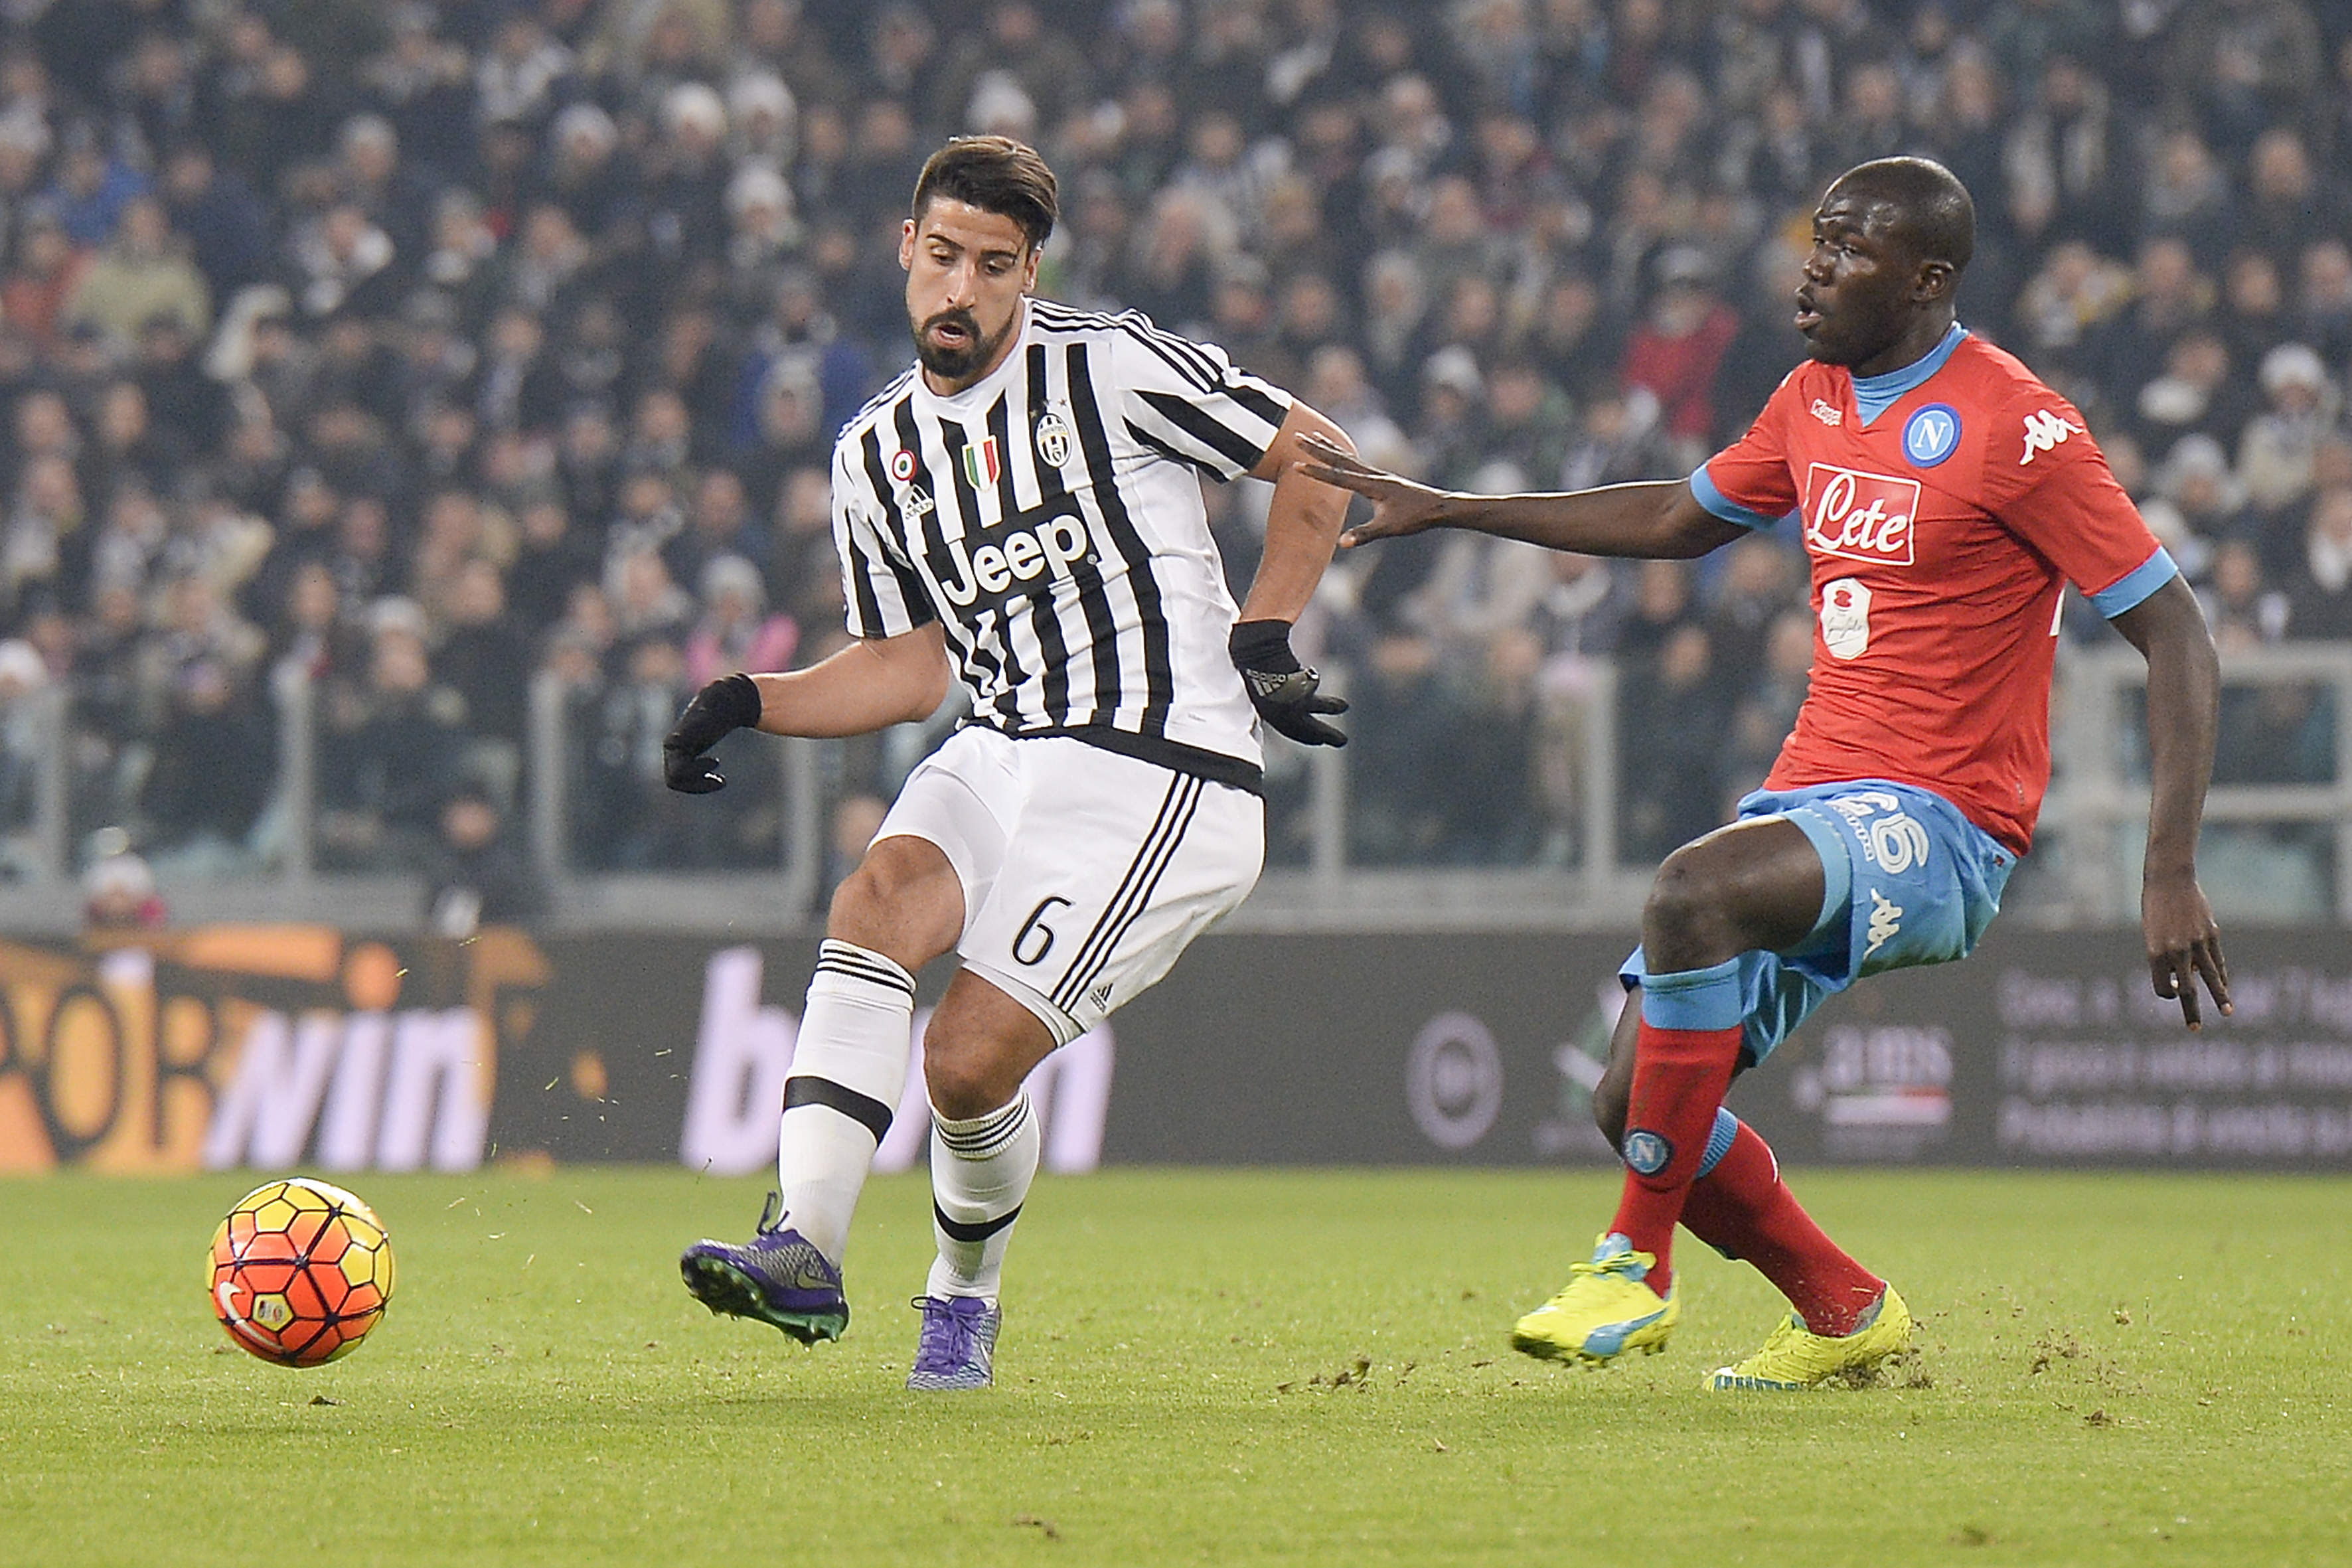 La sfida più bella: ecco Juventus - Napoli 